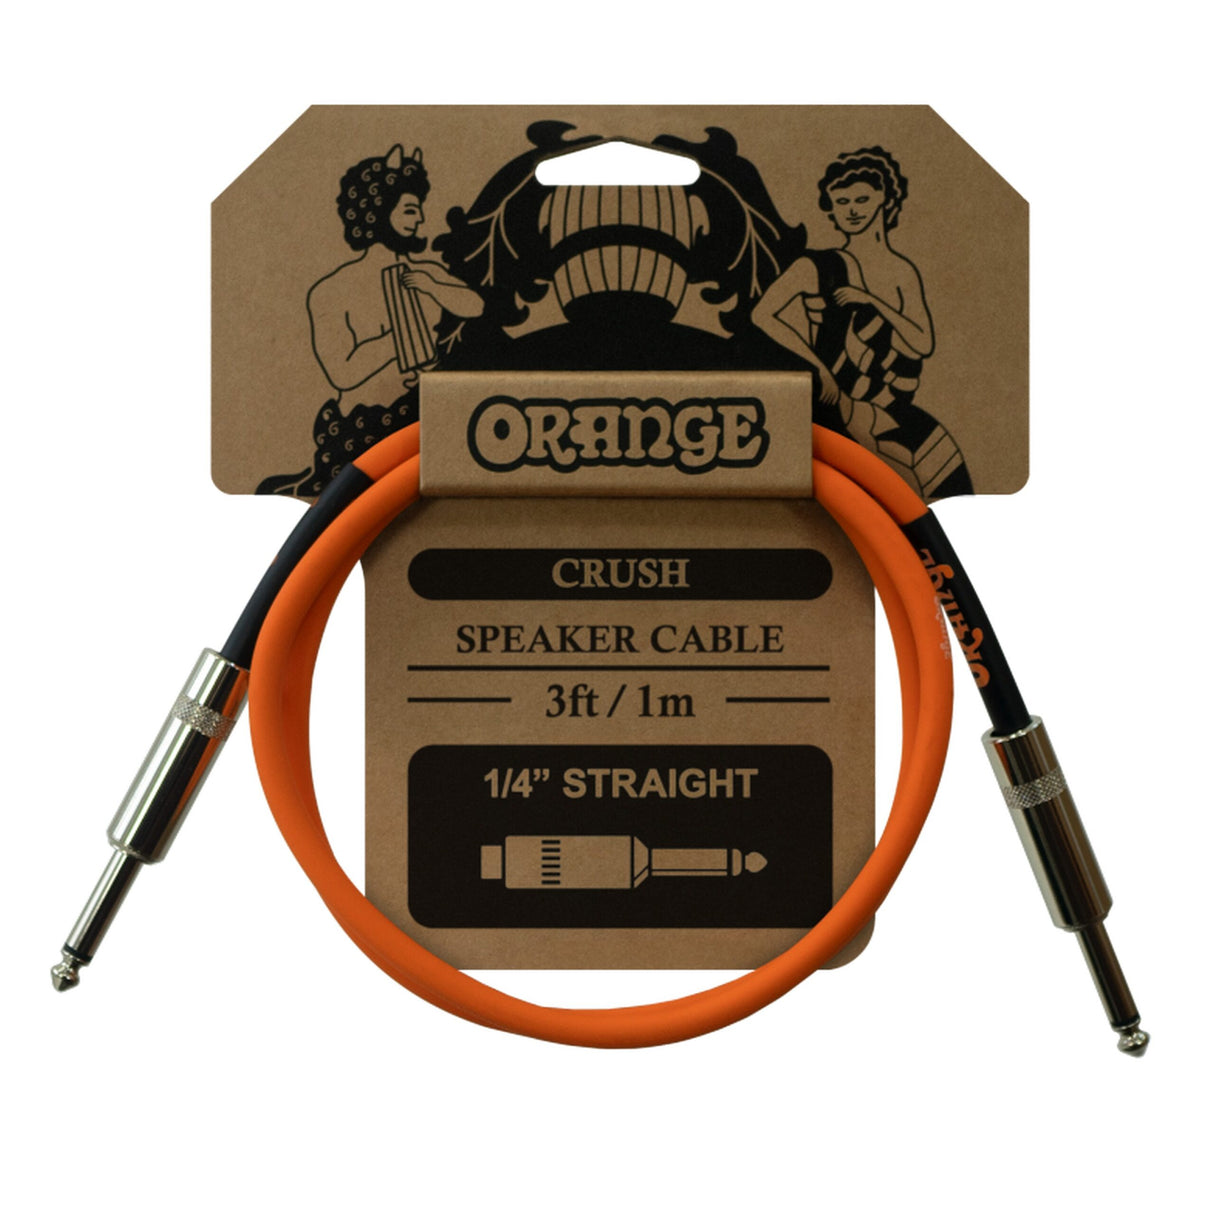 Orange CA040 Crush 3-Foot Speaker Cable, Jack to Jack